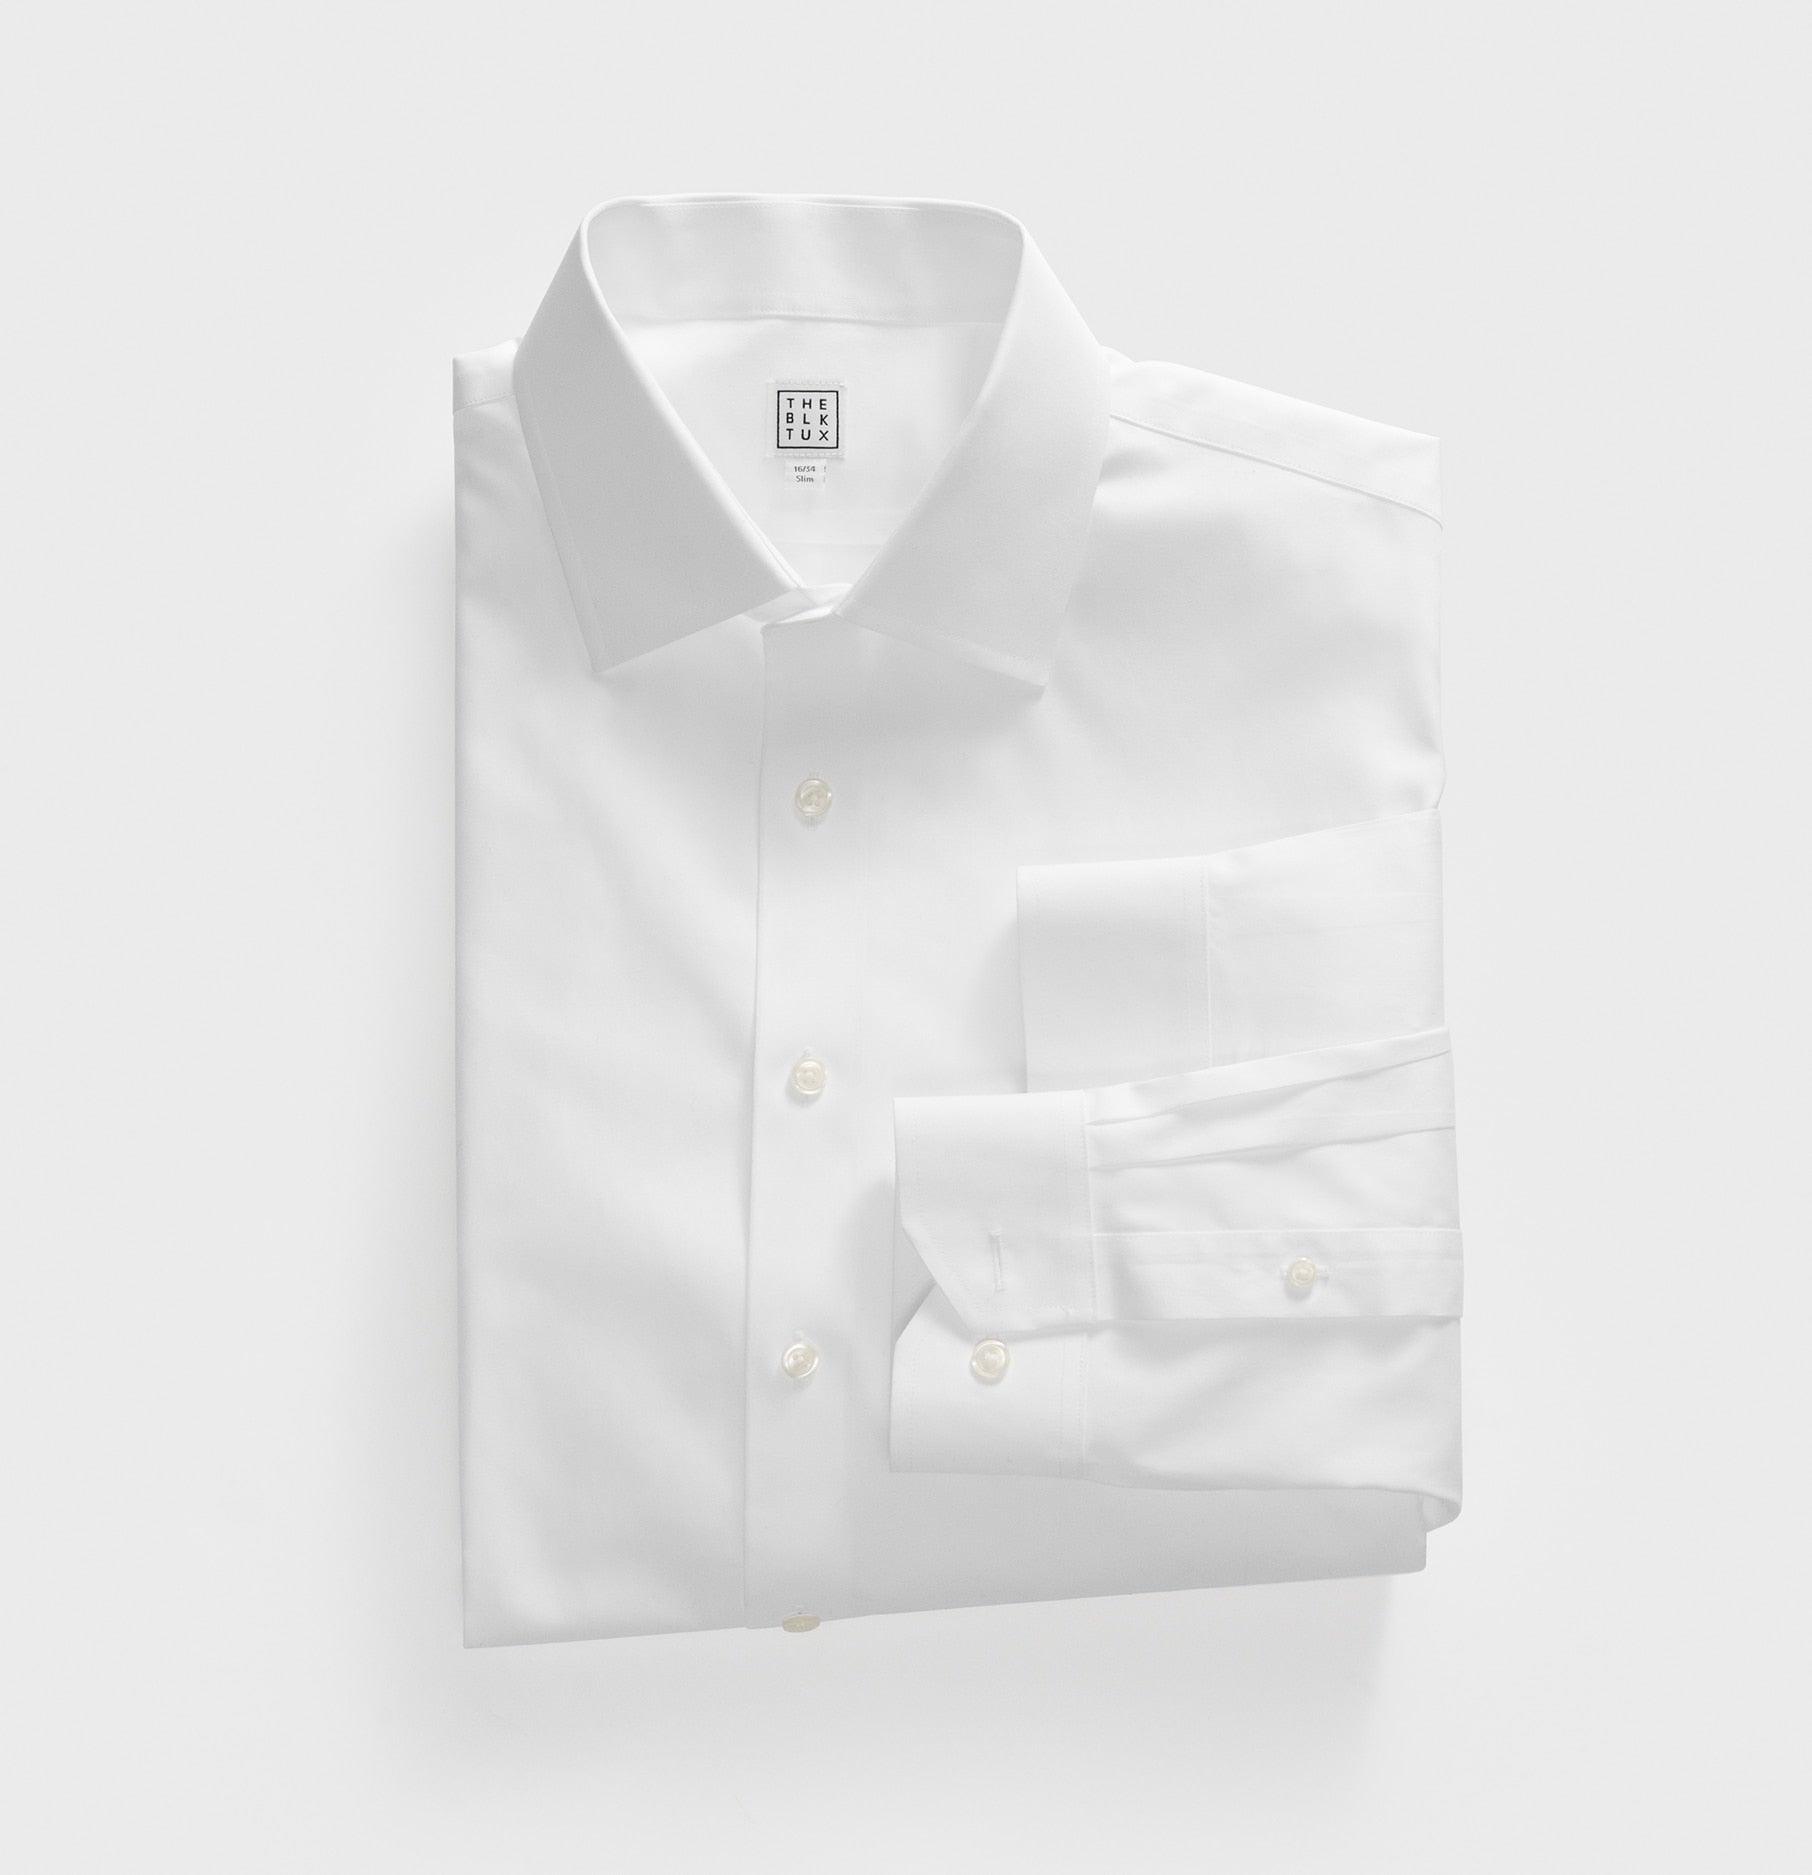 men’s white dress shirt